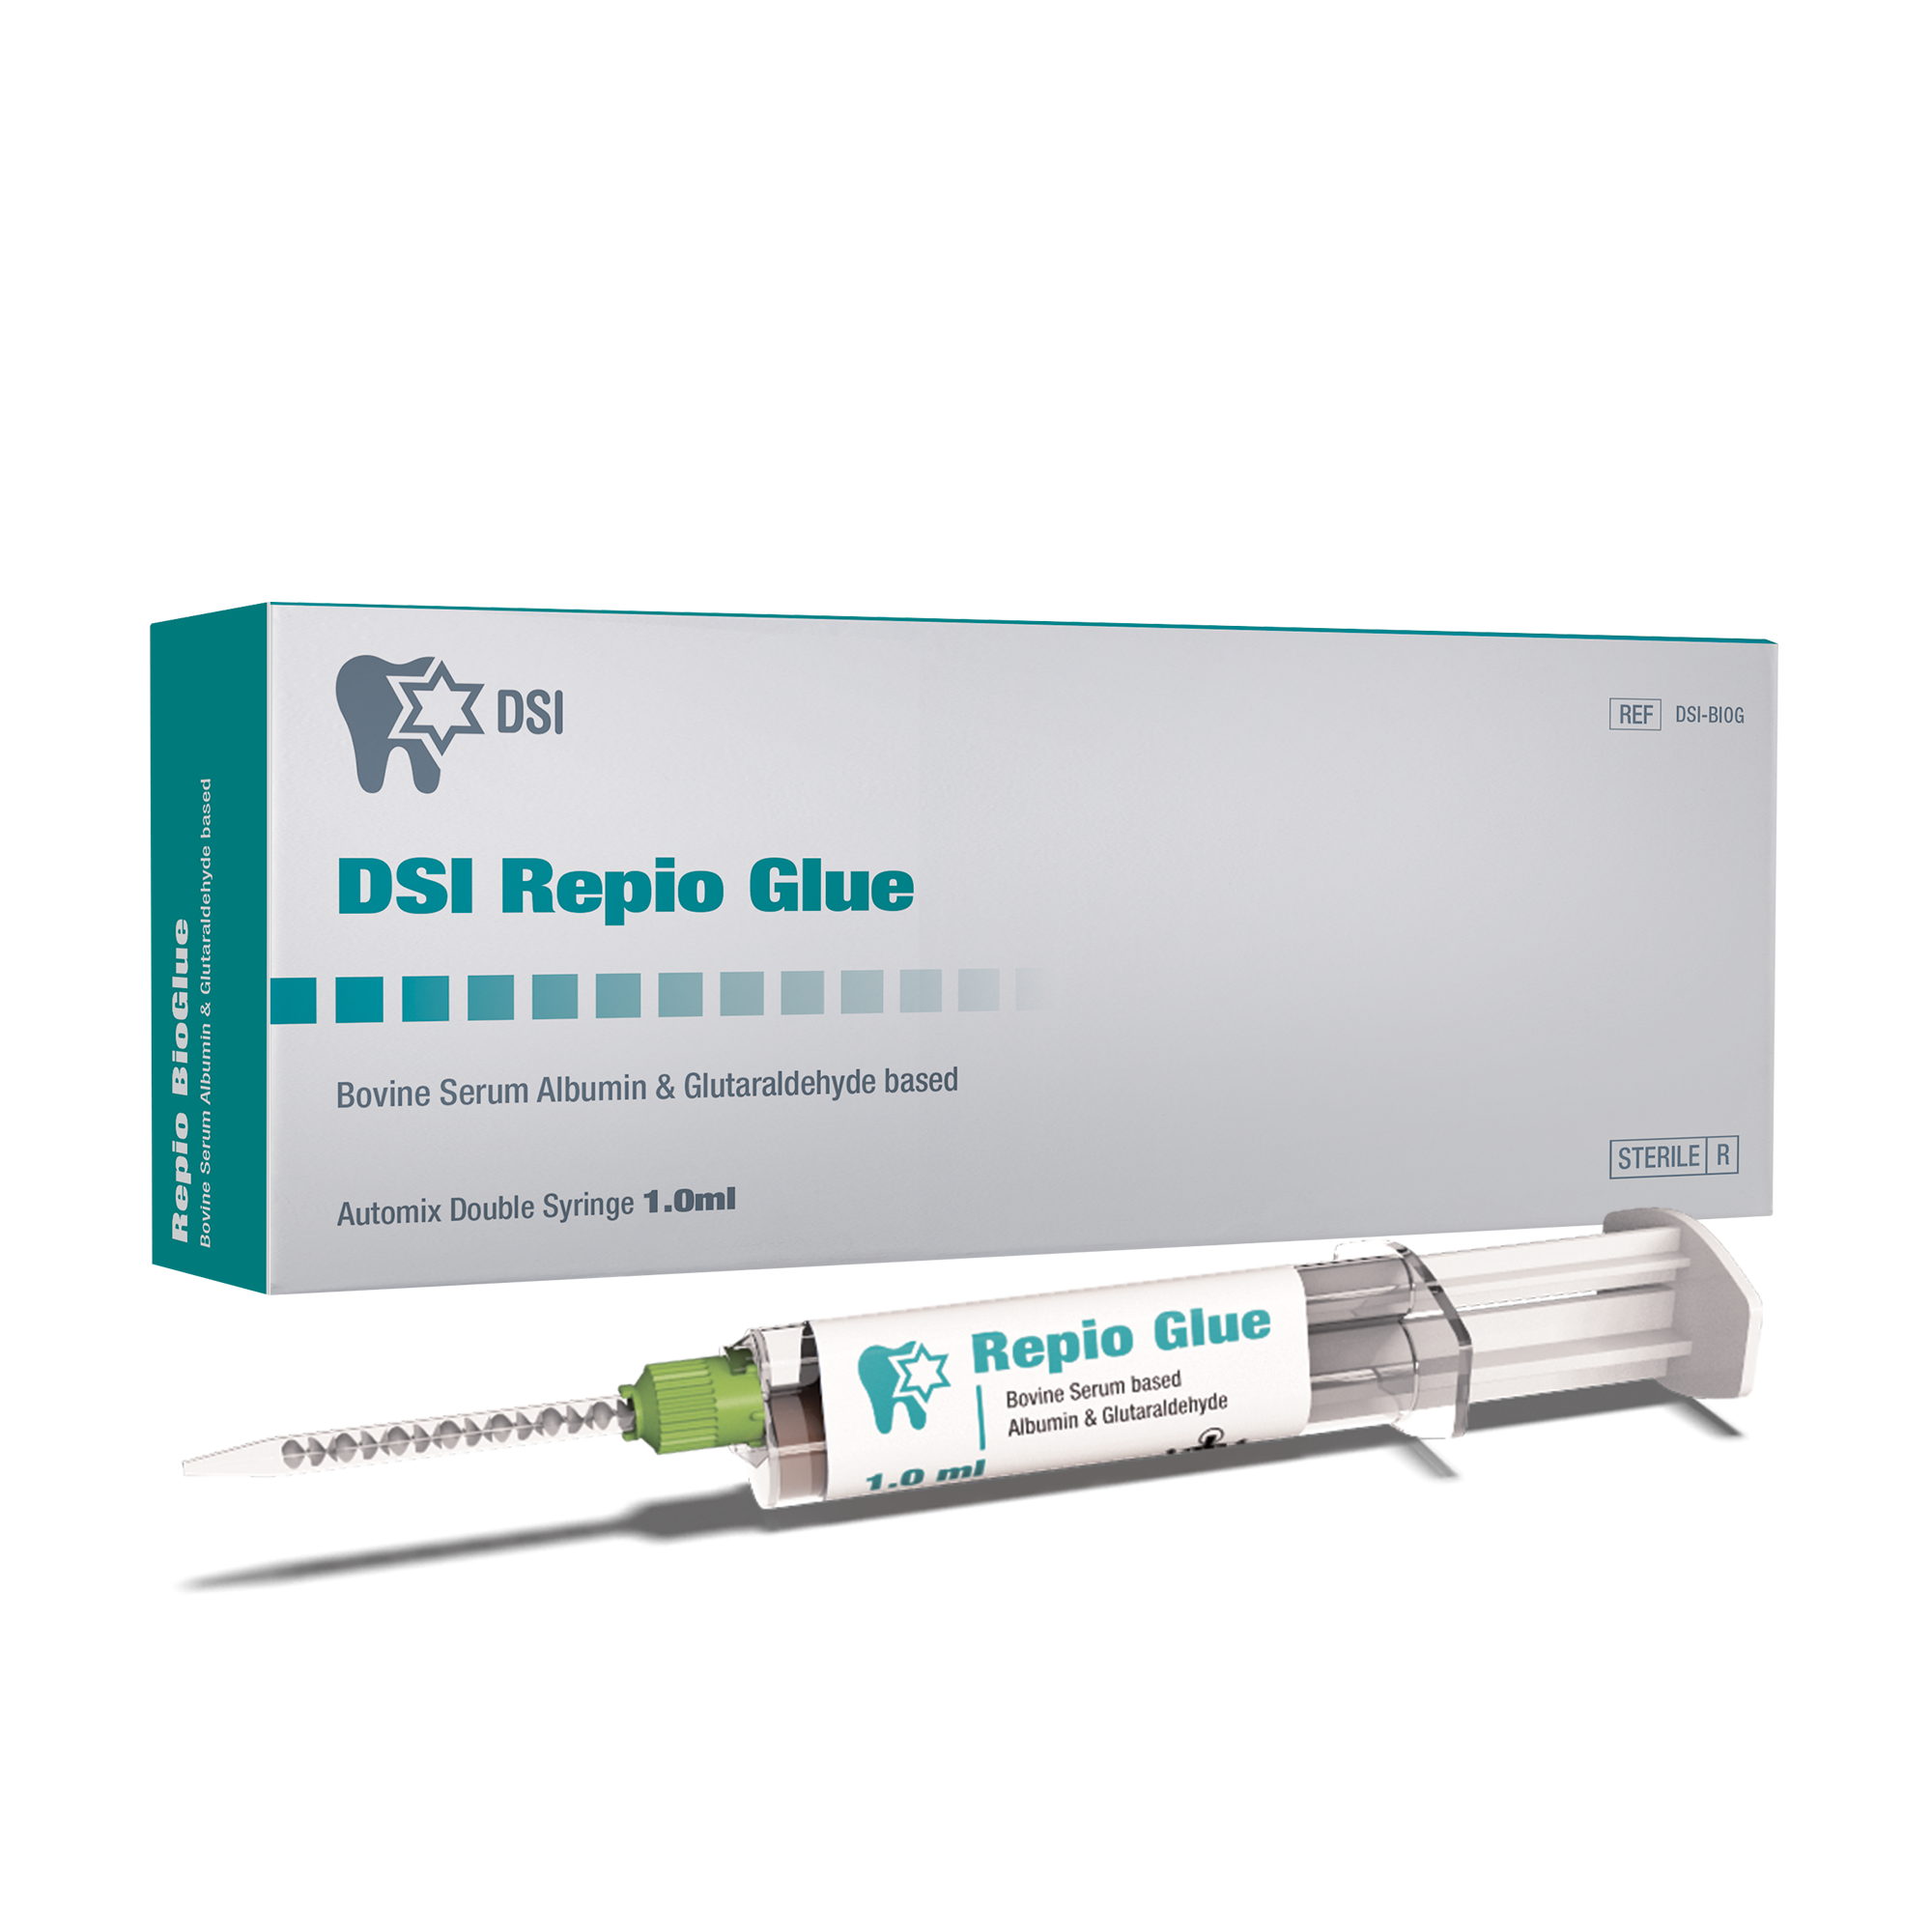 DSI Repio Glue Surgical Adhesive For Soft Tissues and Bones